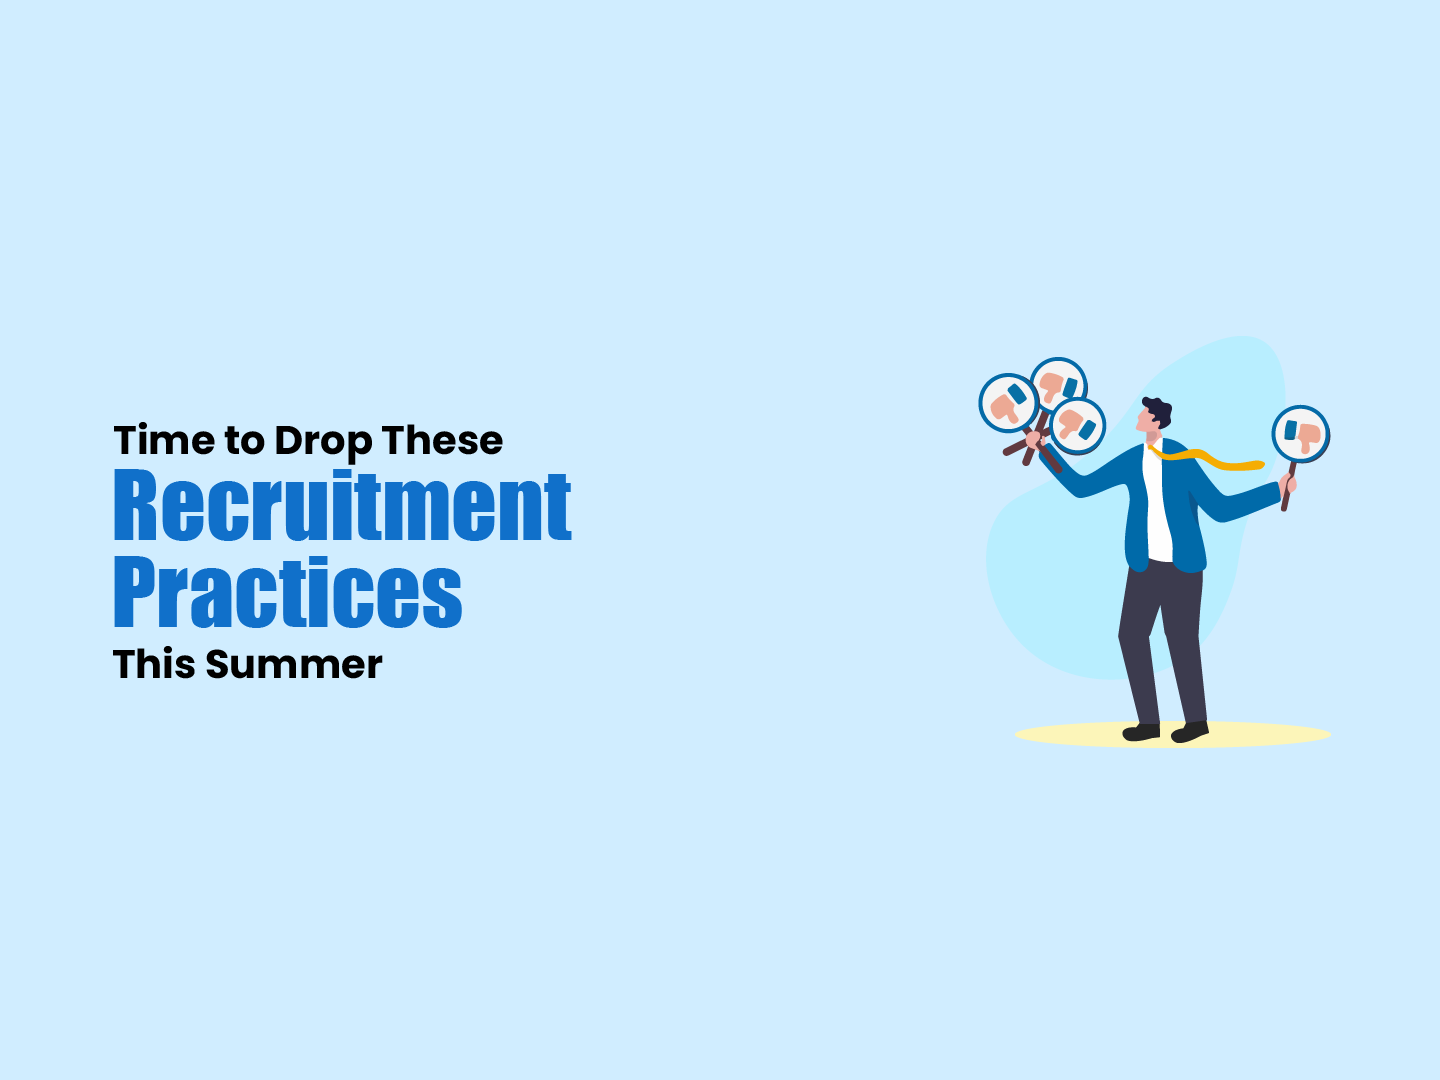 recruitment practices to drop